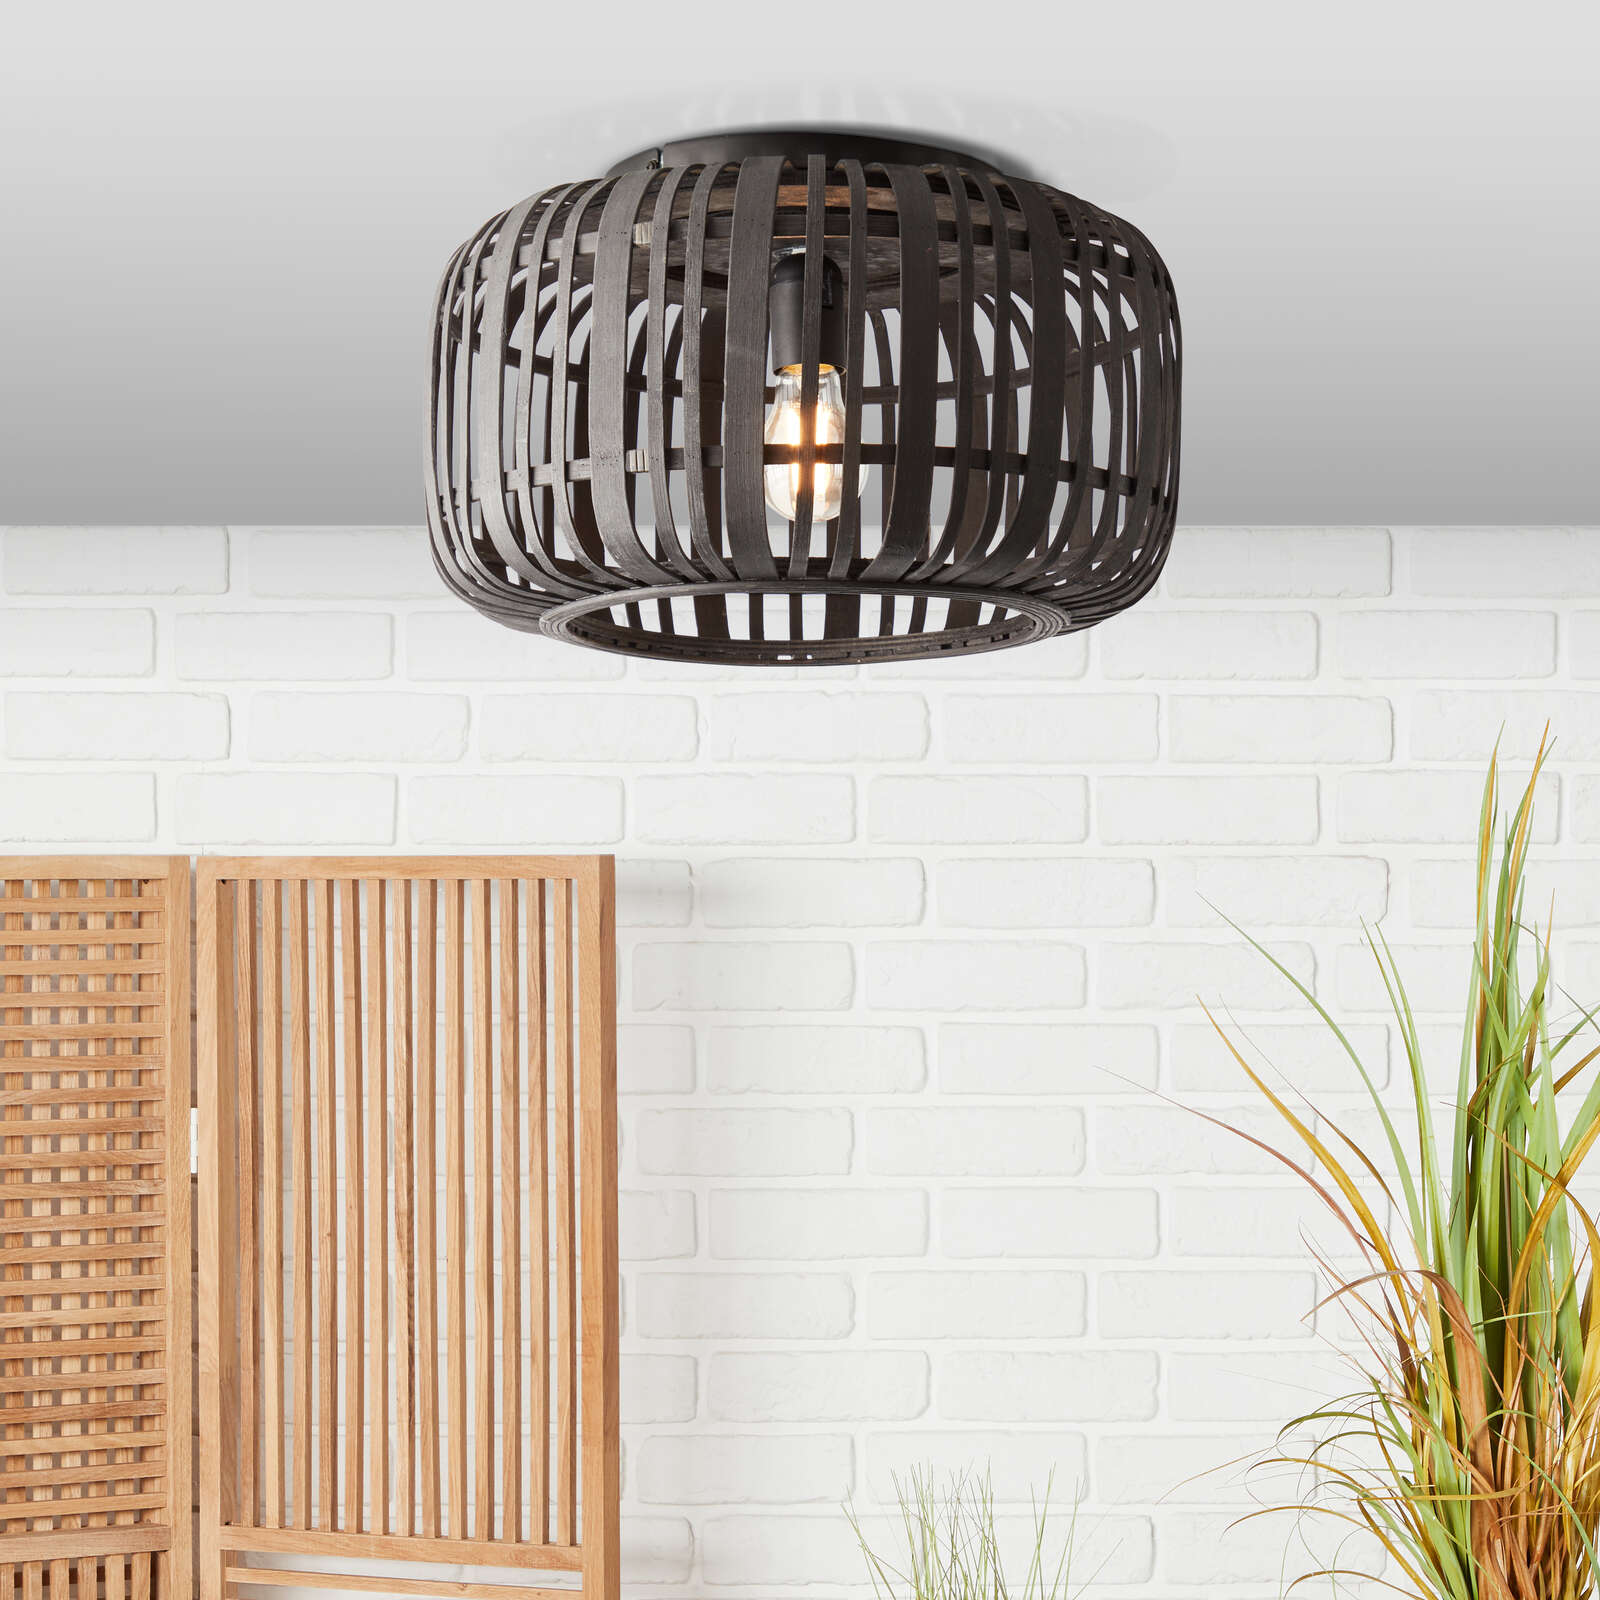             Bamboe plafondlamp - Willi 7 - Bruin
        